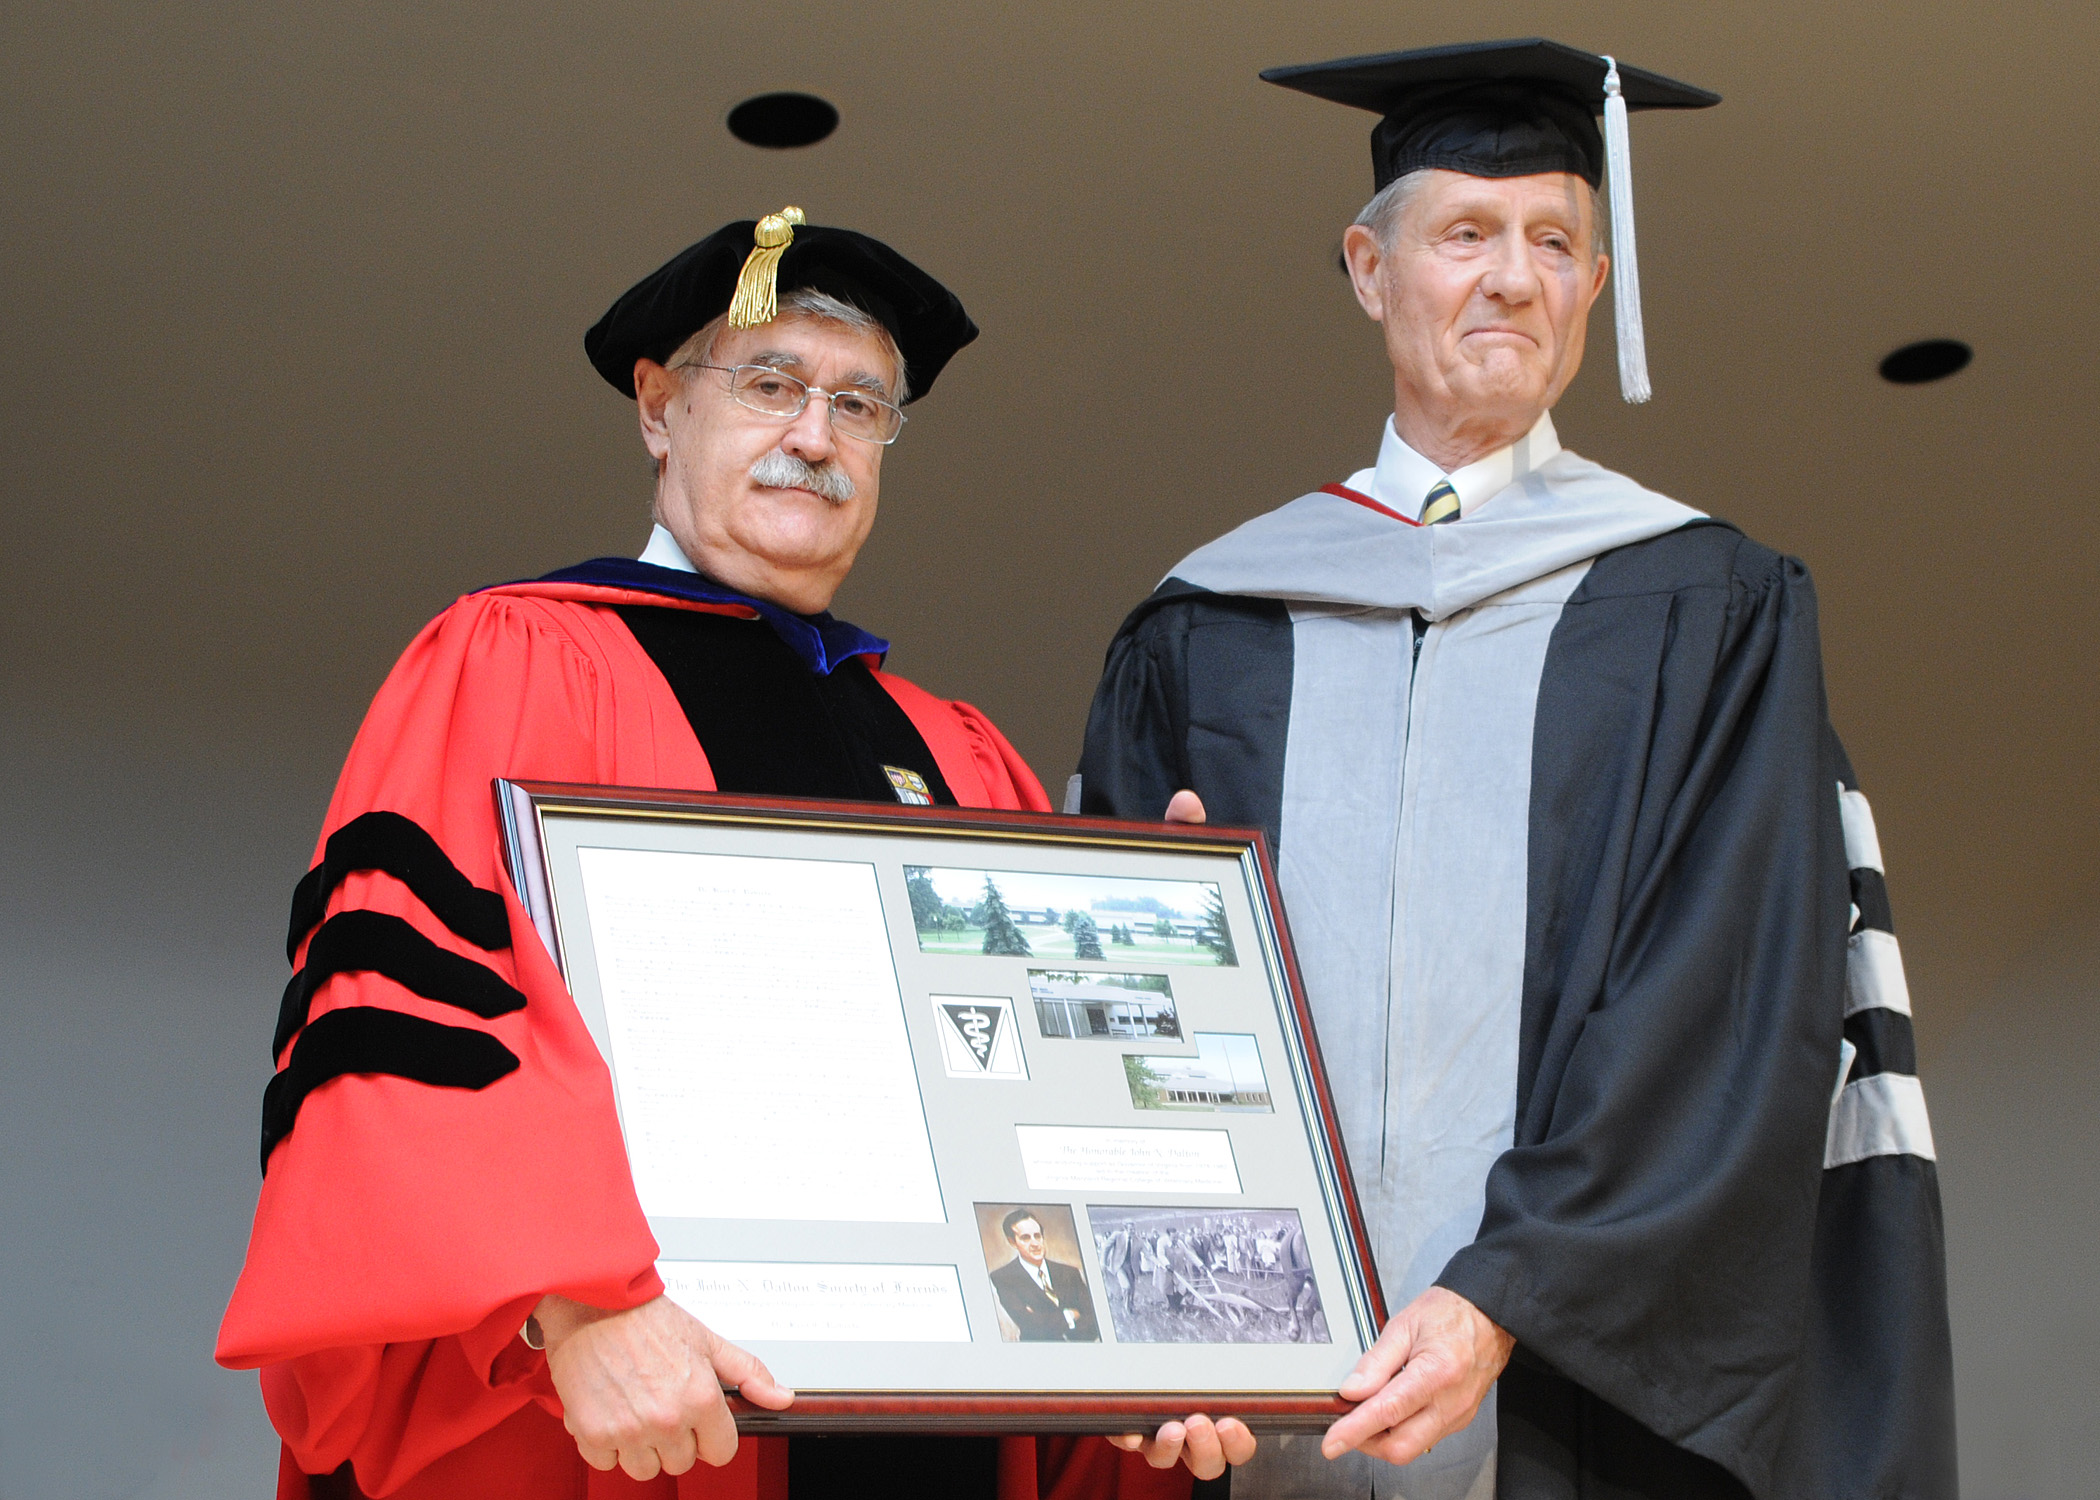 Dean Gerhardt Schurig (left) and Dr. Kent Roberts